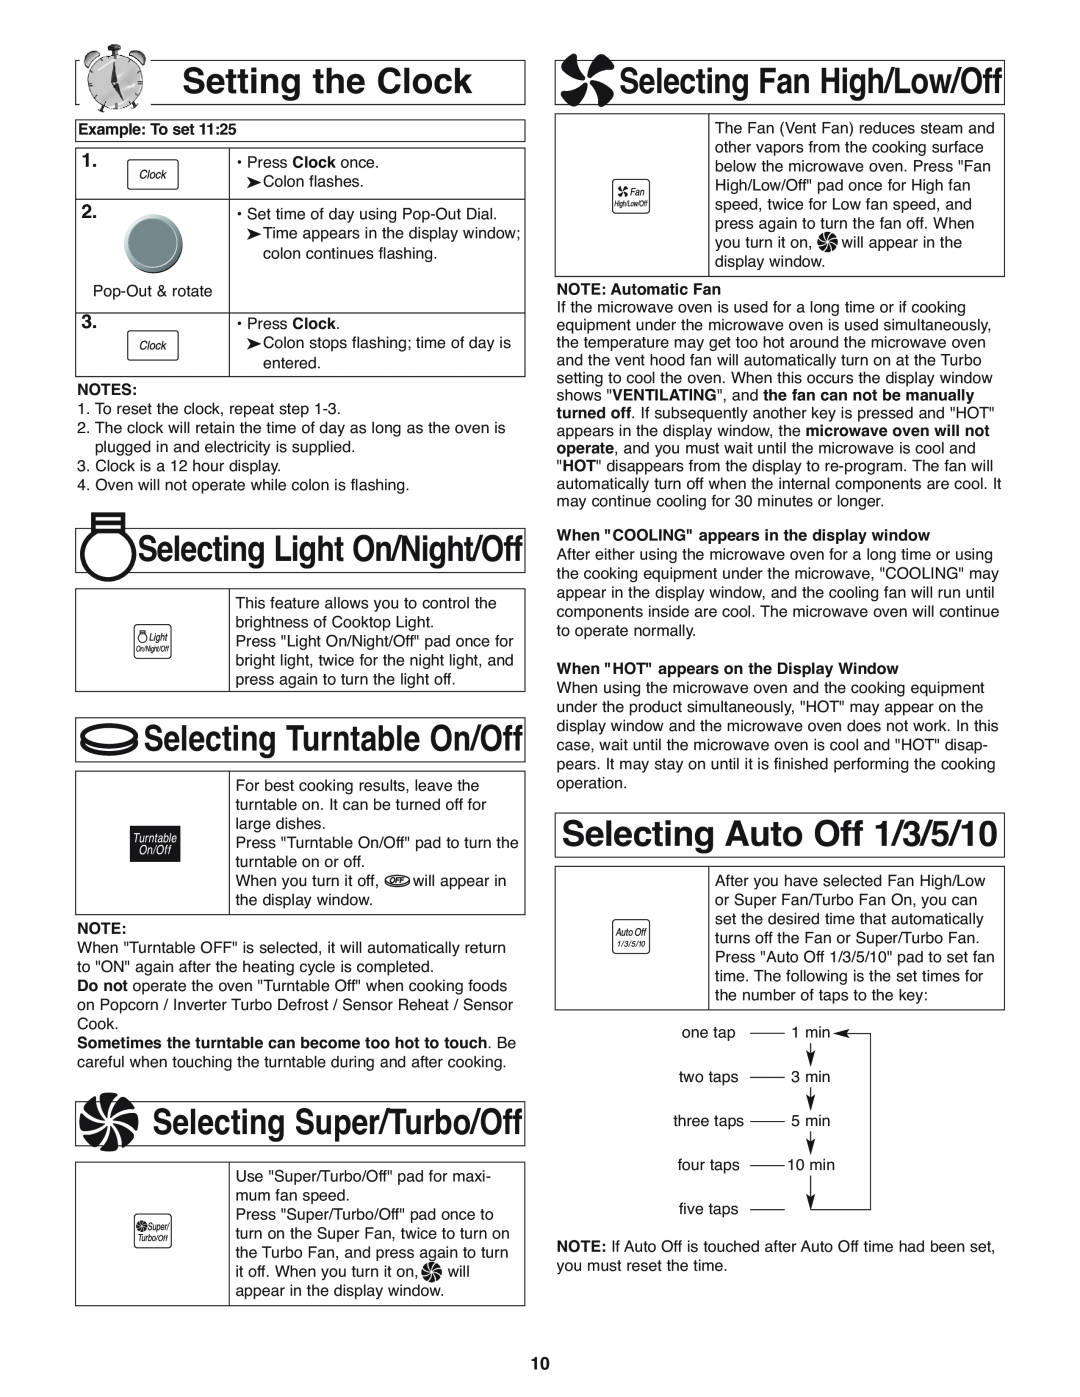 Panasonic NN-H275 Setting the Clock, Selecting Auto Off 1/3/5/10, Selecting Fan High/Low/Off, Selecting Turntable On/Off 